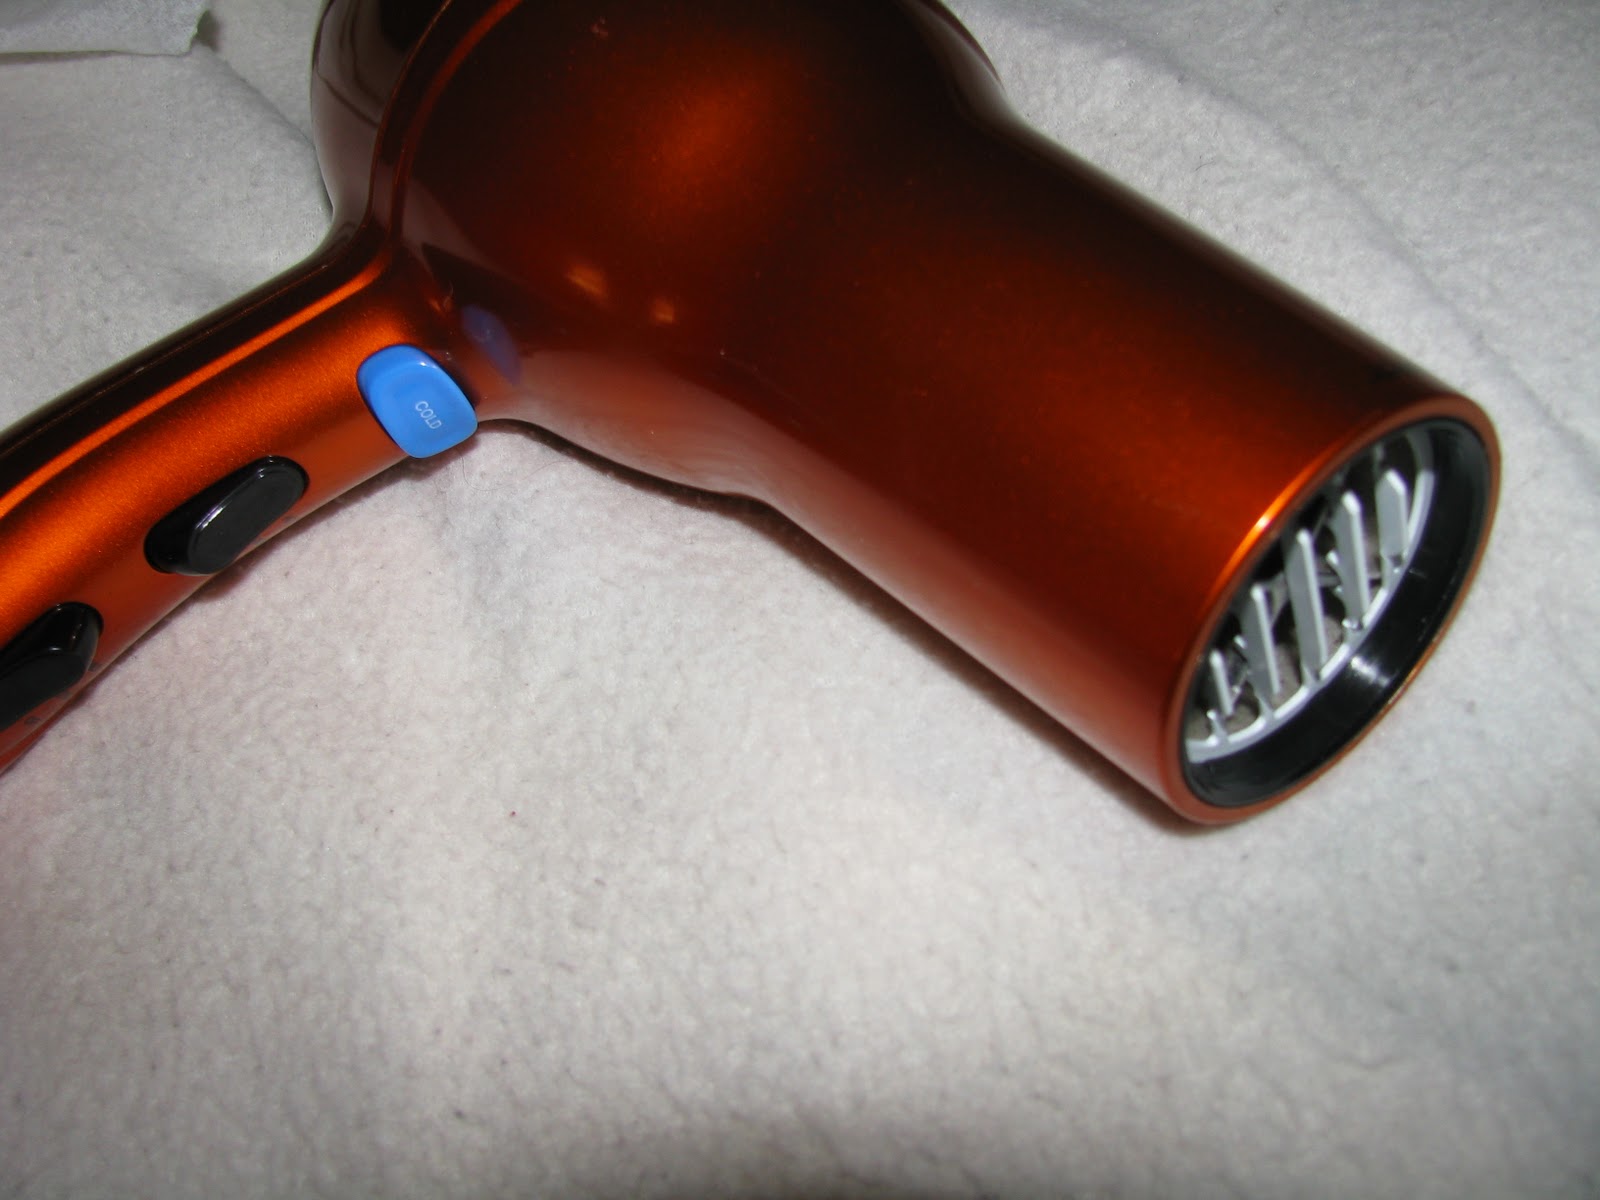 INFINITIPRO BY CONAIR 1875 Watt Salon Performance AC Motor Styling Tool/Hair Dryer; Orange - wide 6